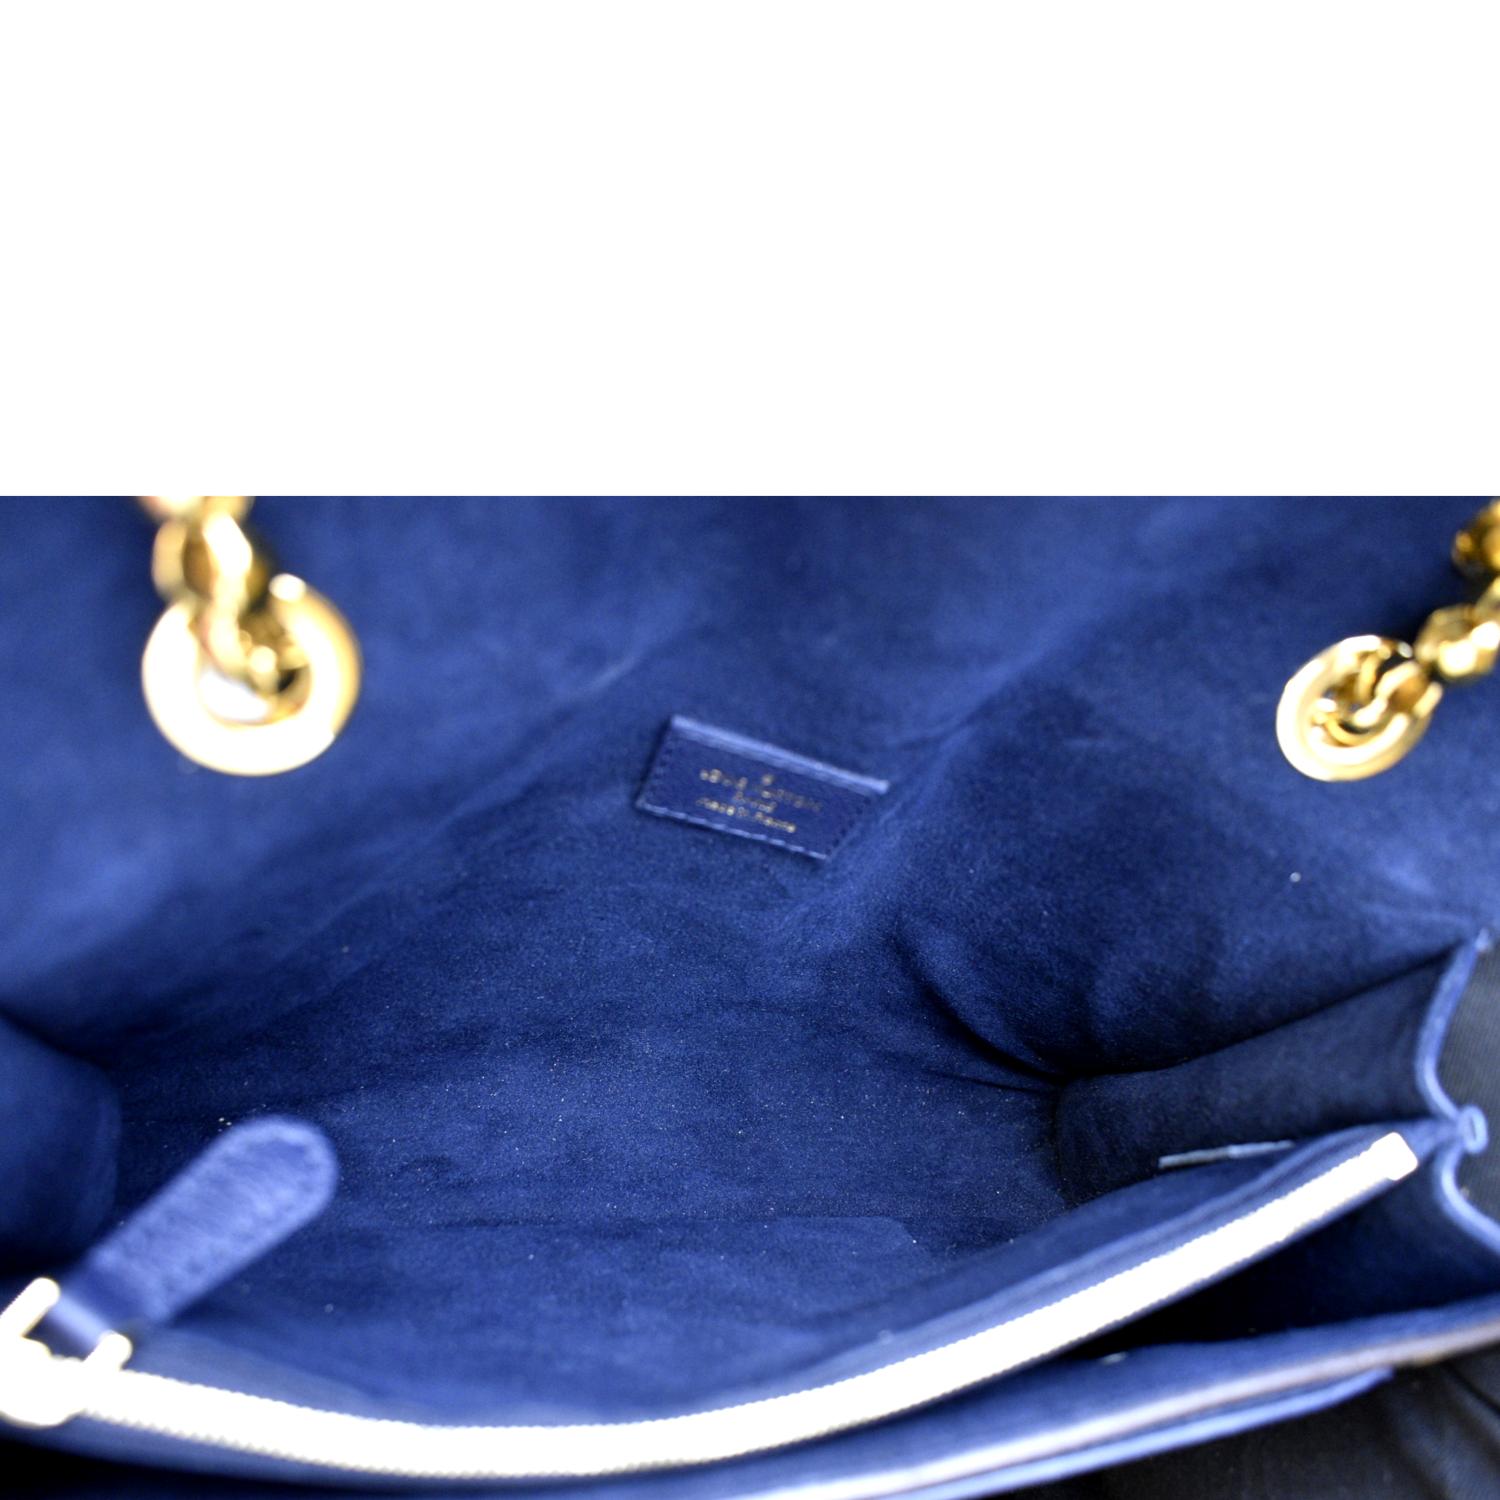 Louis Vuitton Victoire Handbag Monogram Canvas and Python Brown 1218721